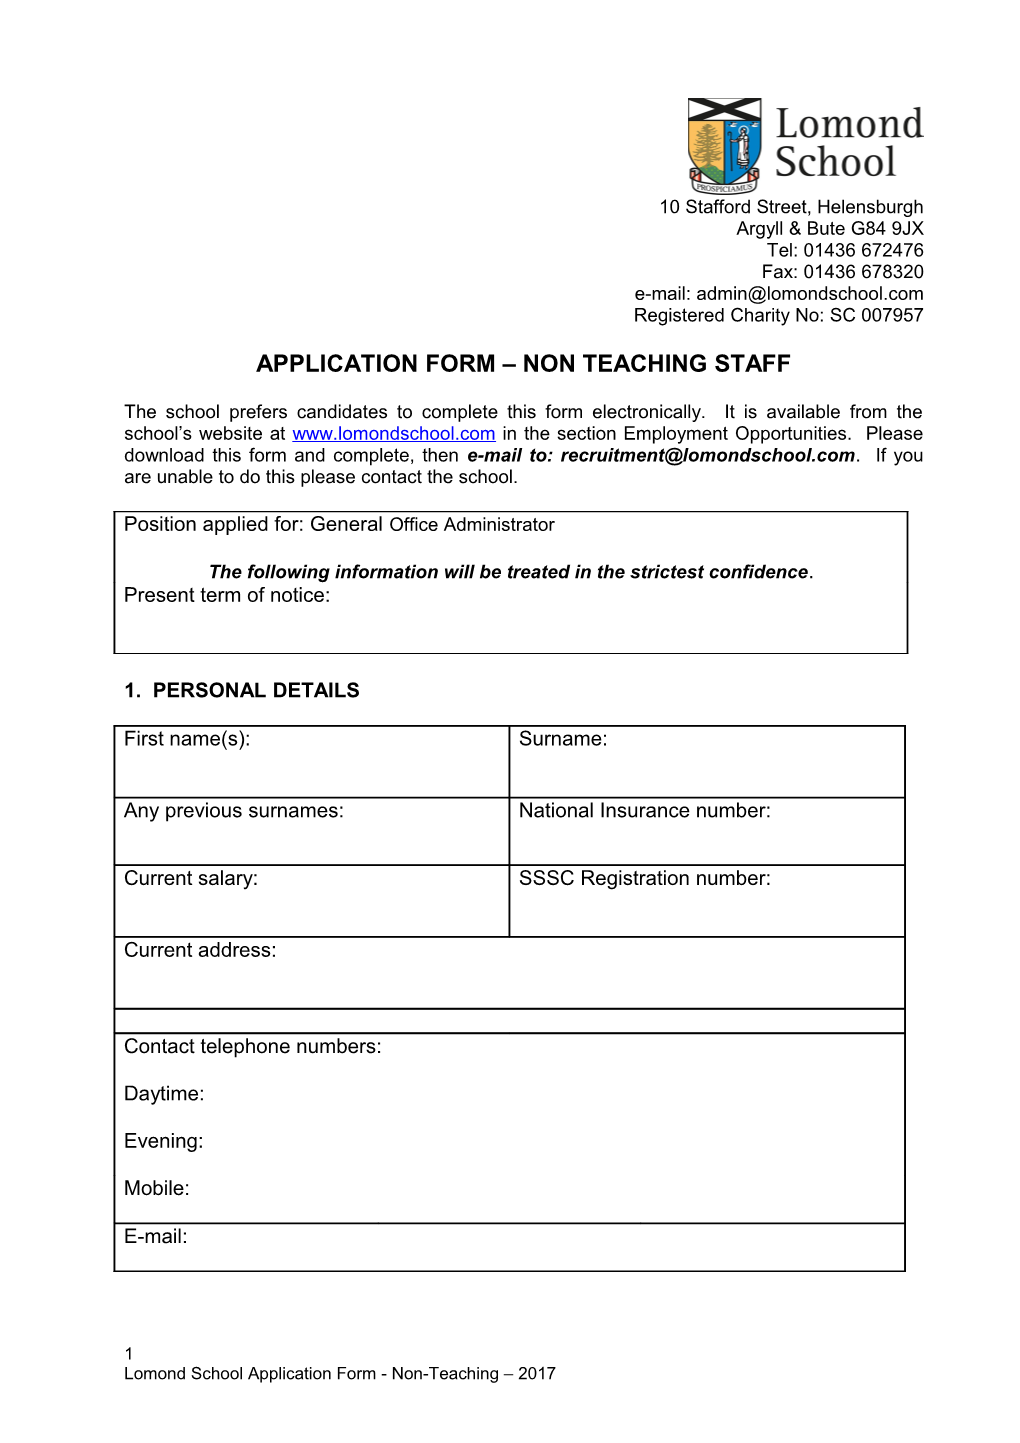 Application Form Non Teaching Staff